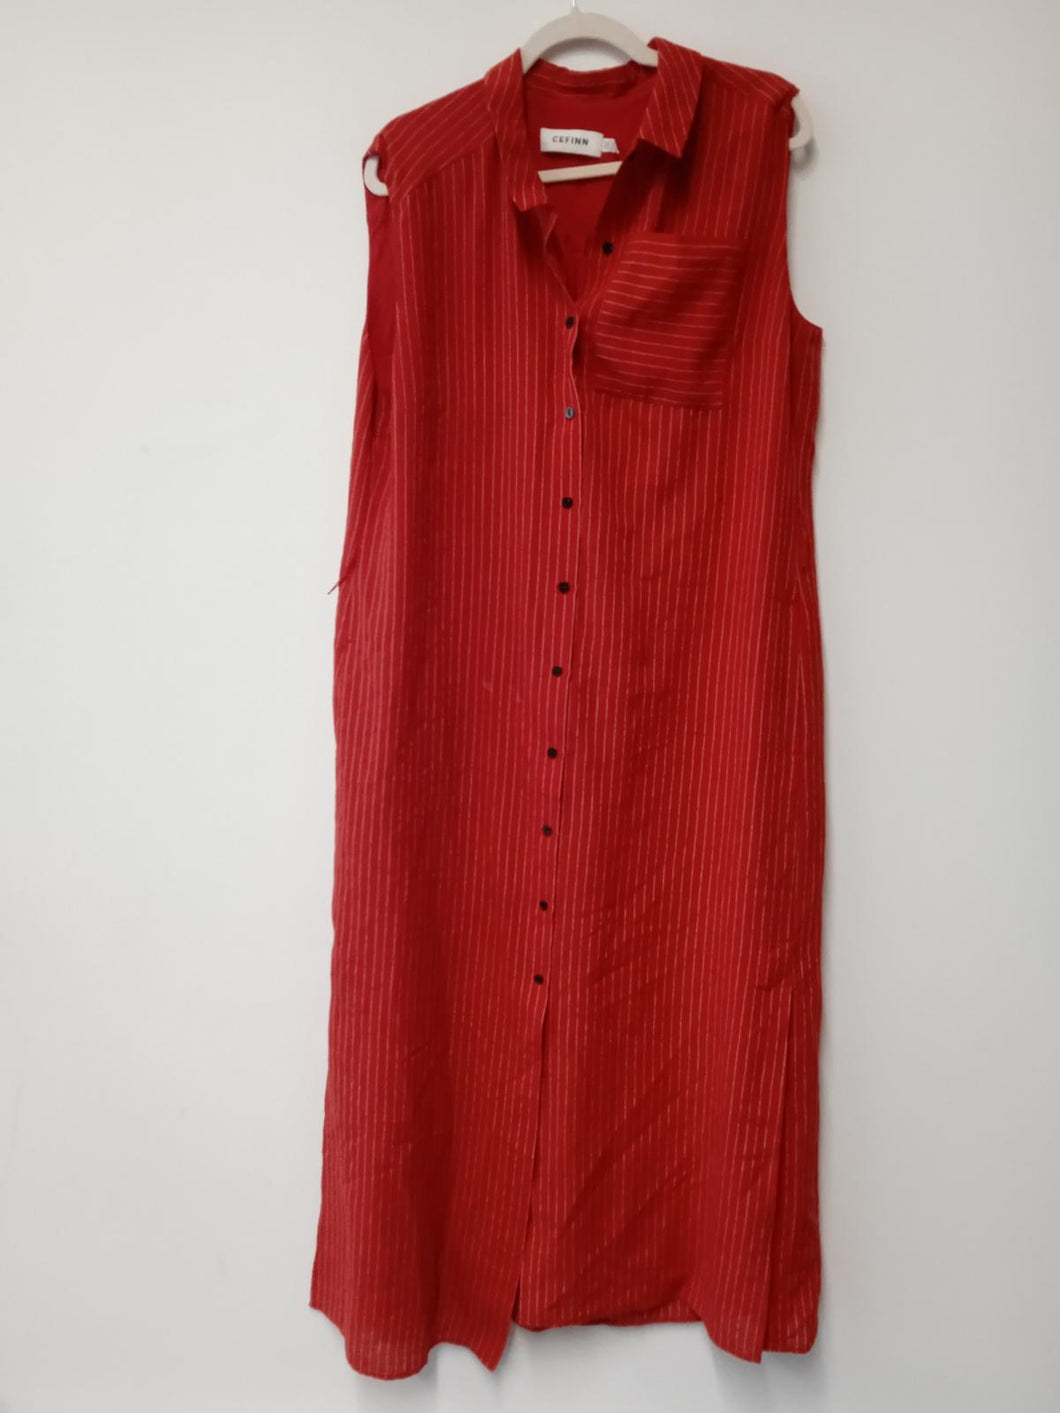 CEFINN Ladies Red Pinstripe Sleeveless Collared Button Up Dress Size UK16